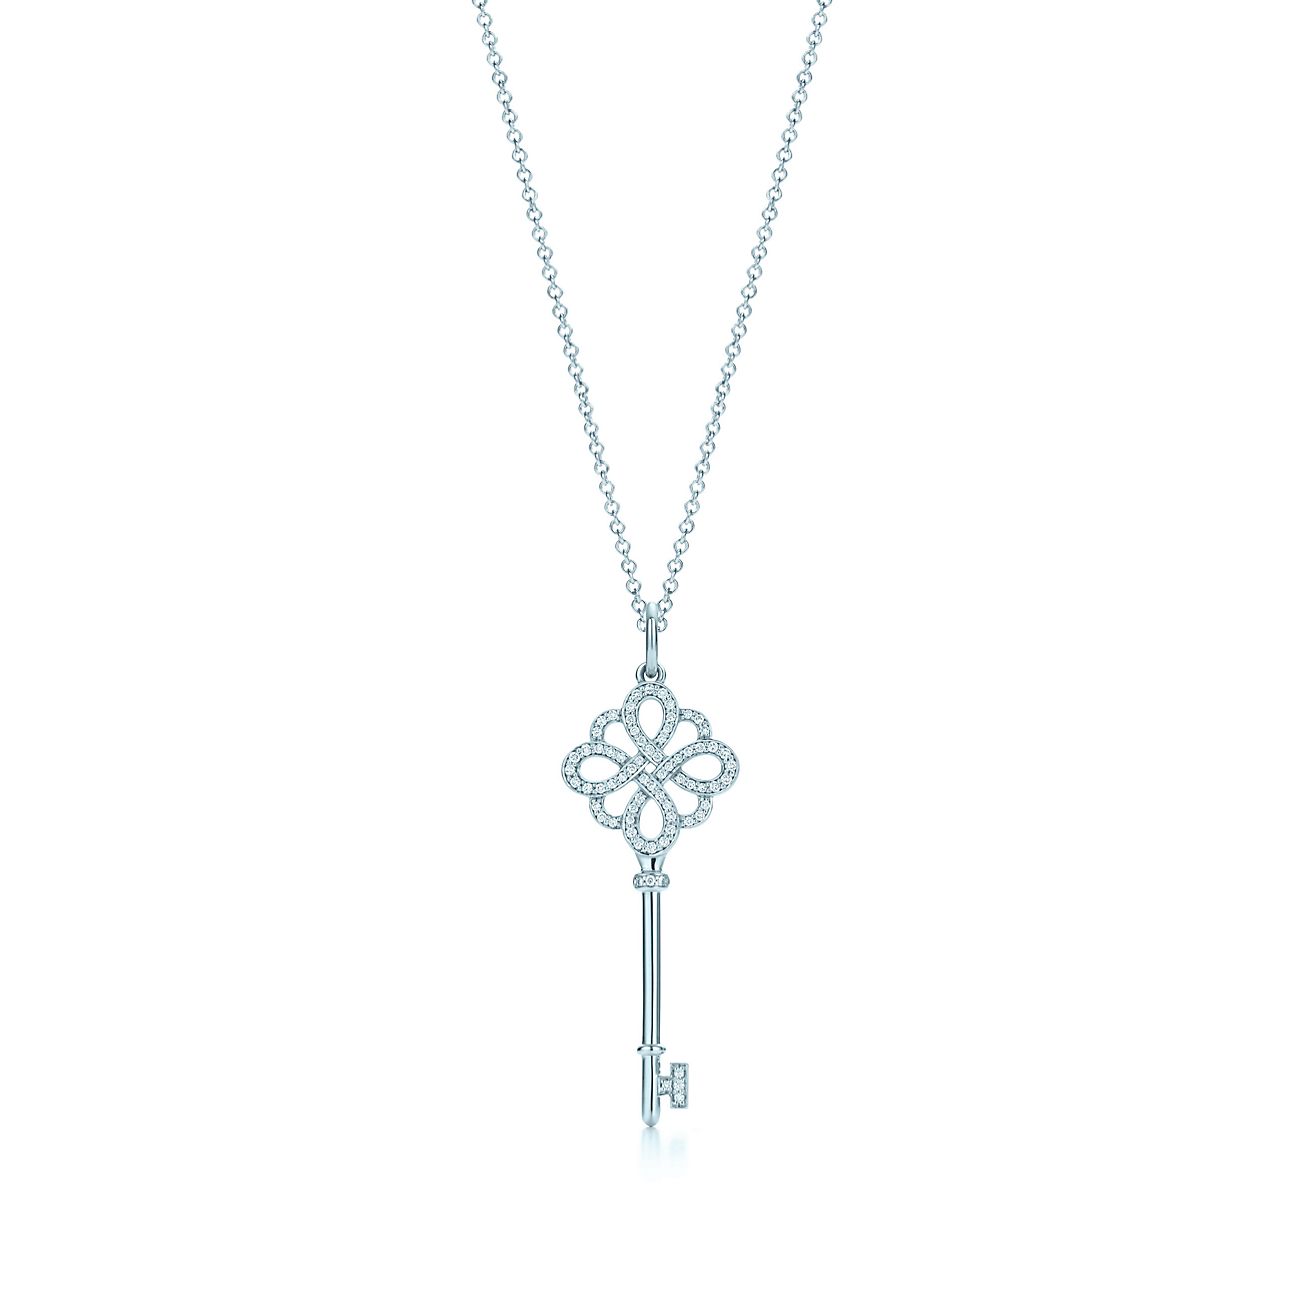 all things tiffany blue  Tiffany key, Accessorize, Key necklace